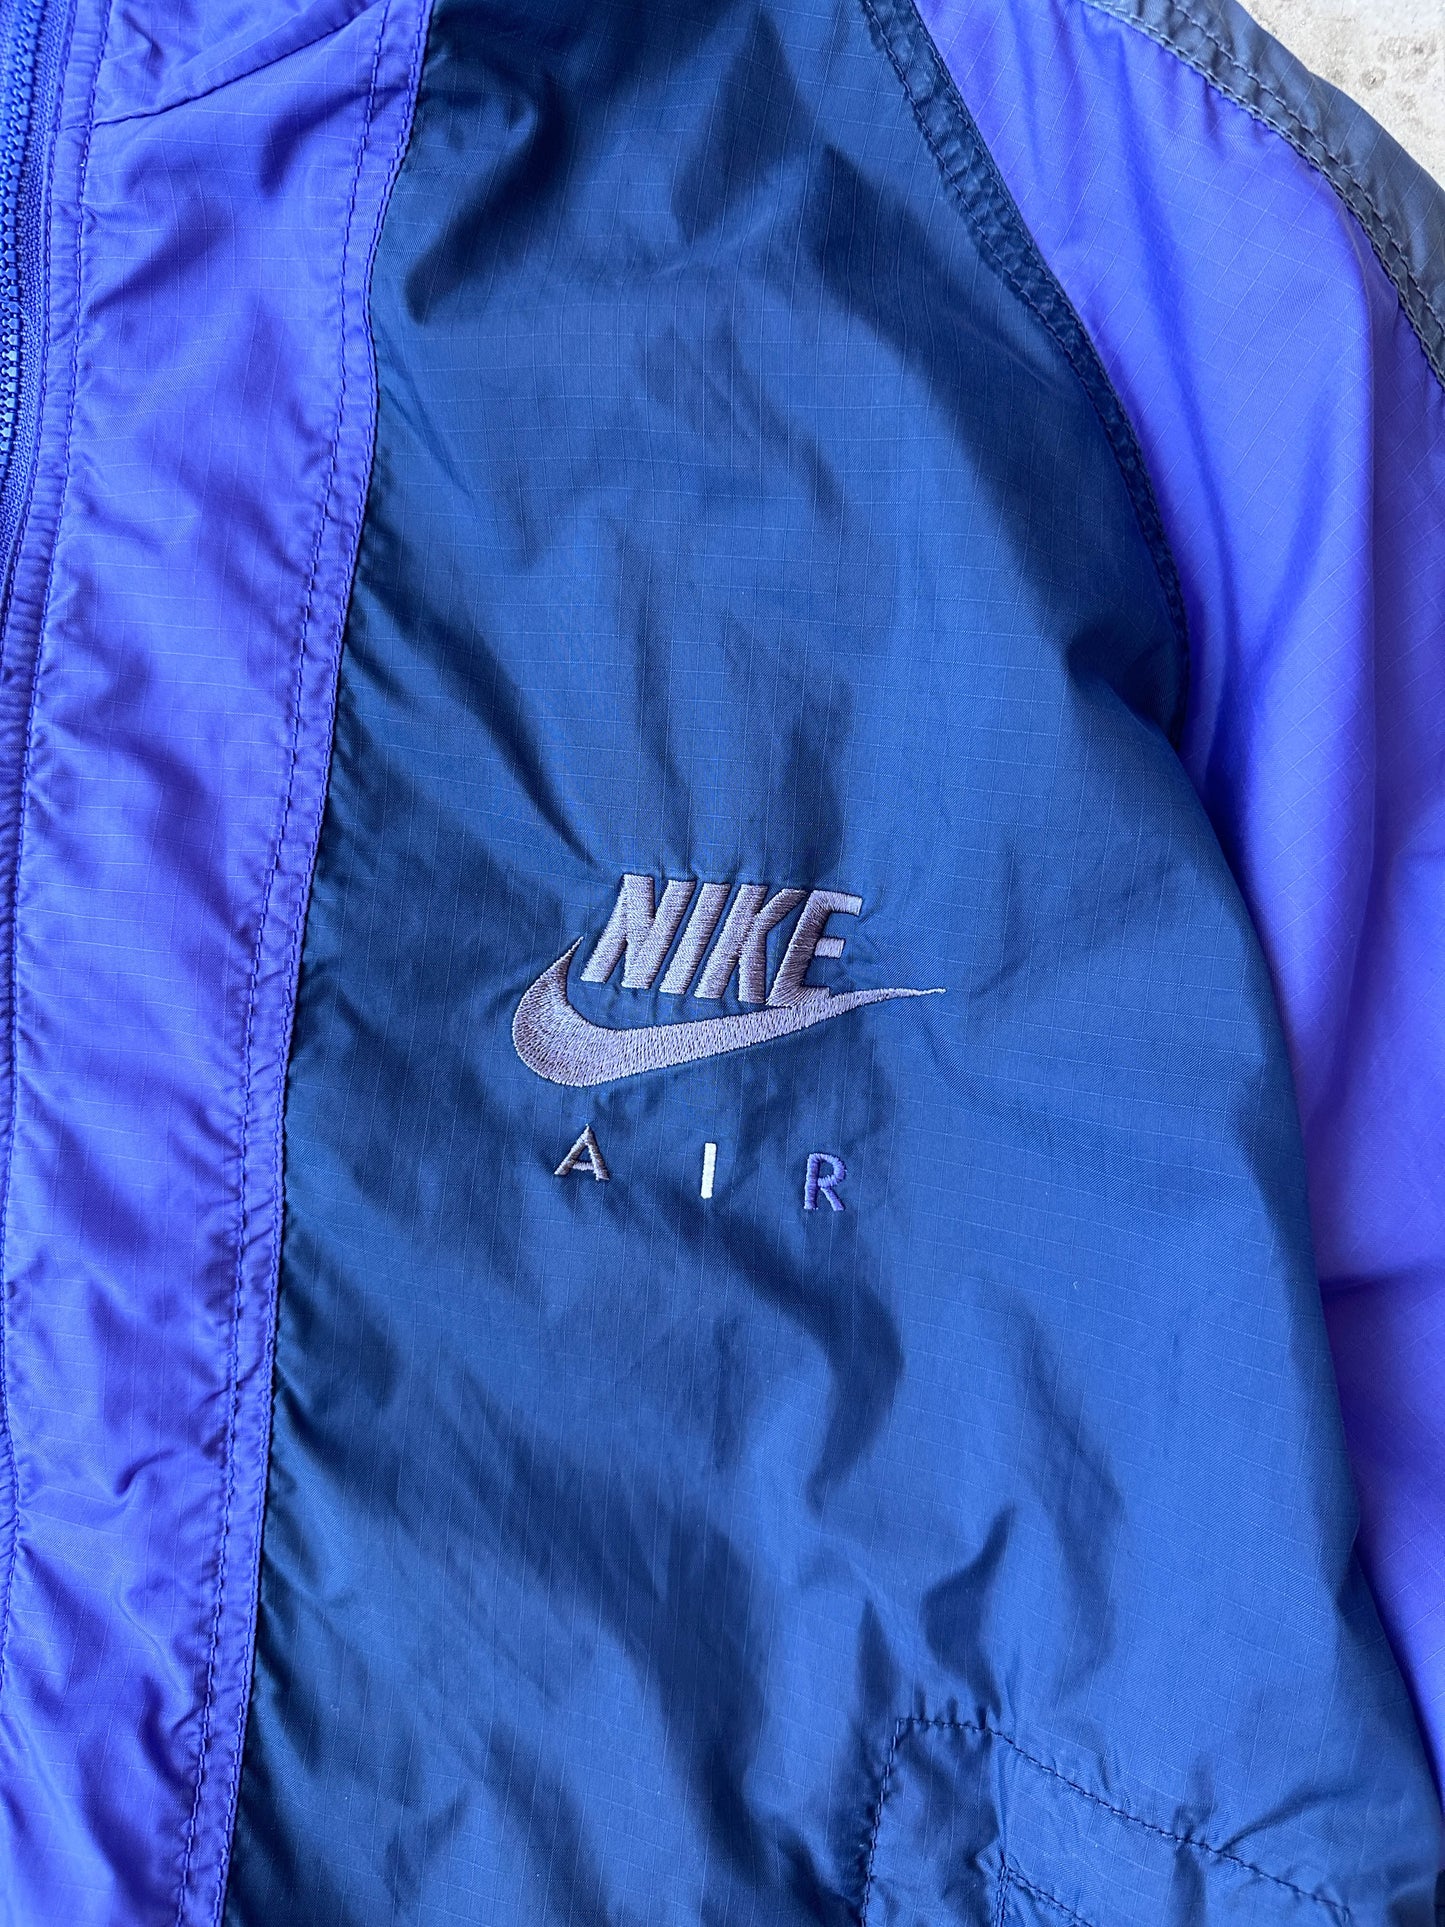 Chaqueta Nike vintage 90s